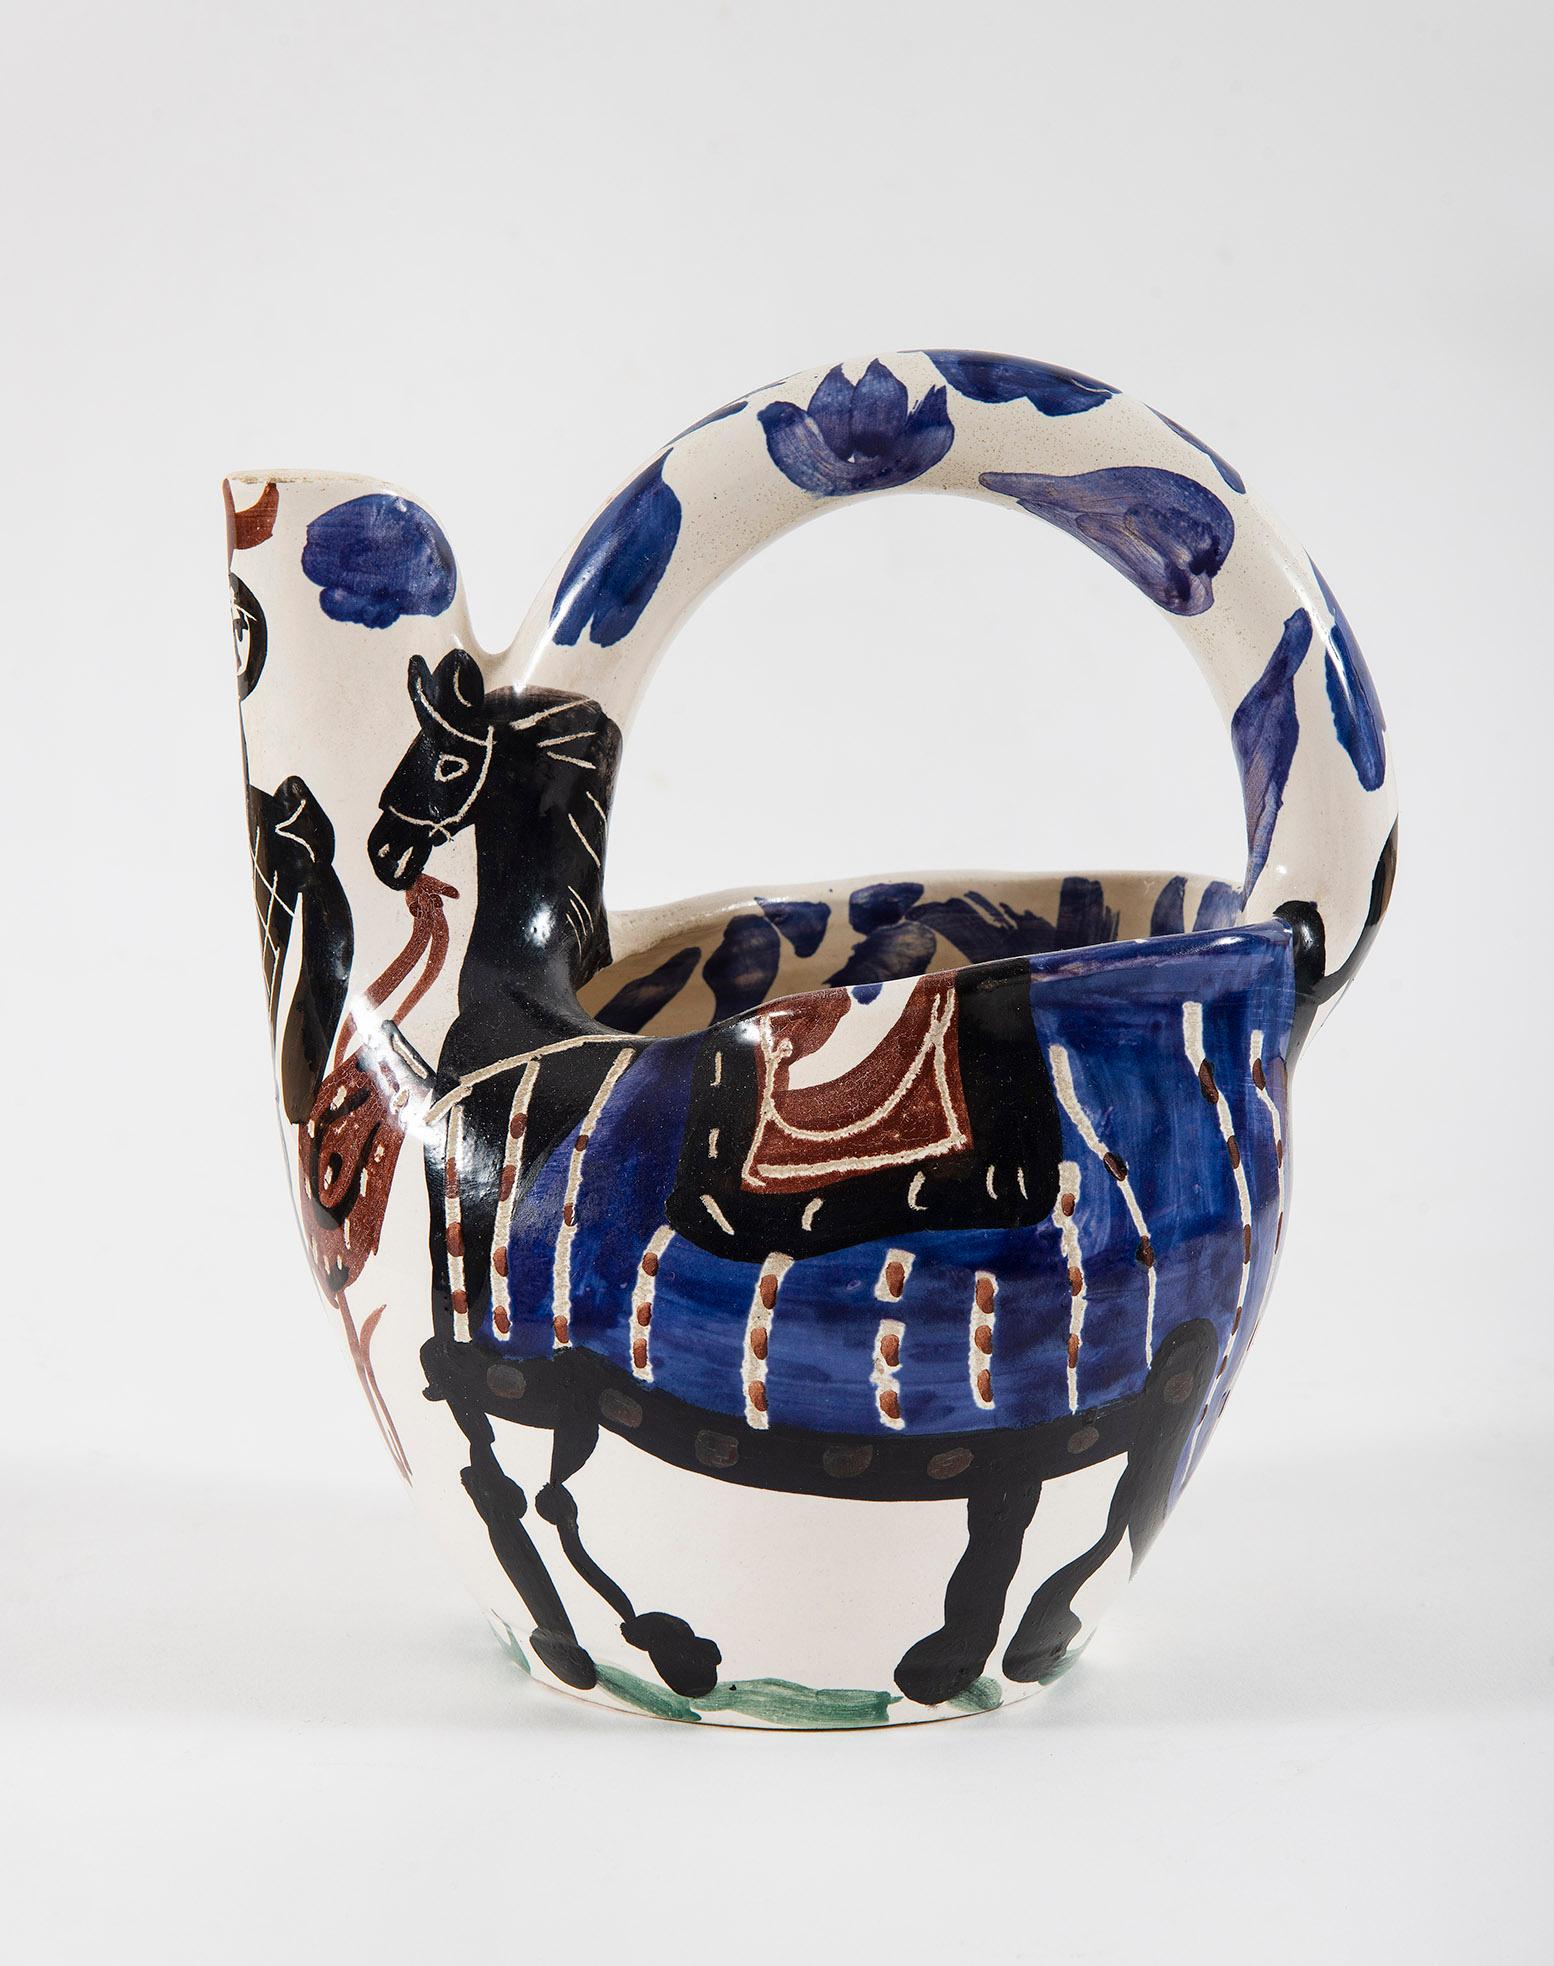 Cavalier et Cheval, Picasso, 1950er Jahre, Krug, Keramik, Design, Steingut, Ton – Sculpture von Pablo Picasso